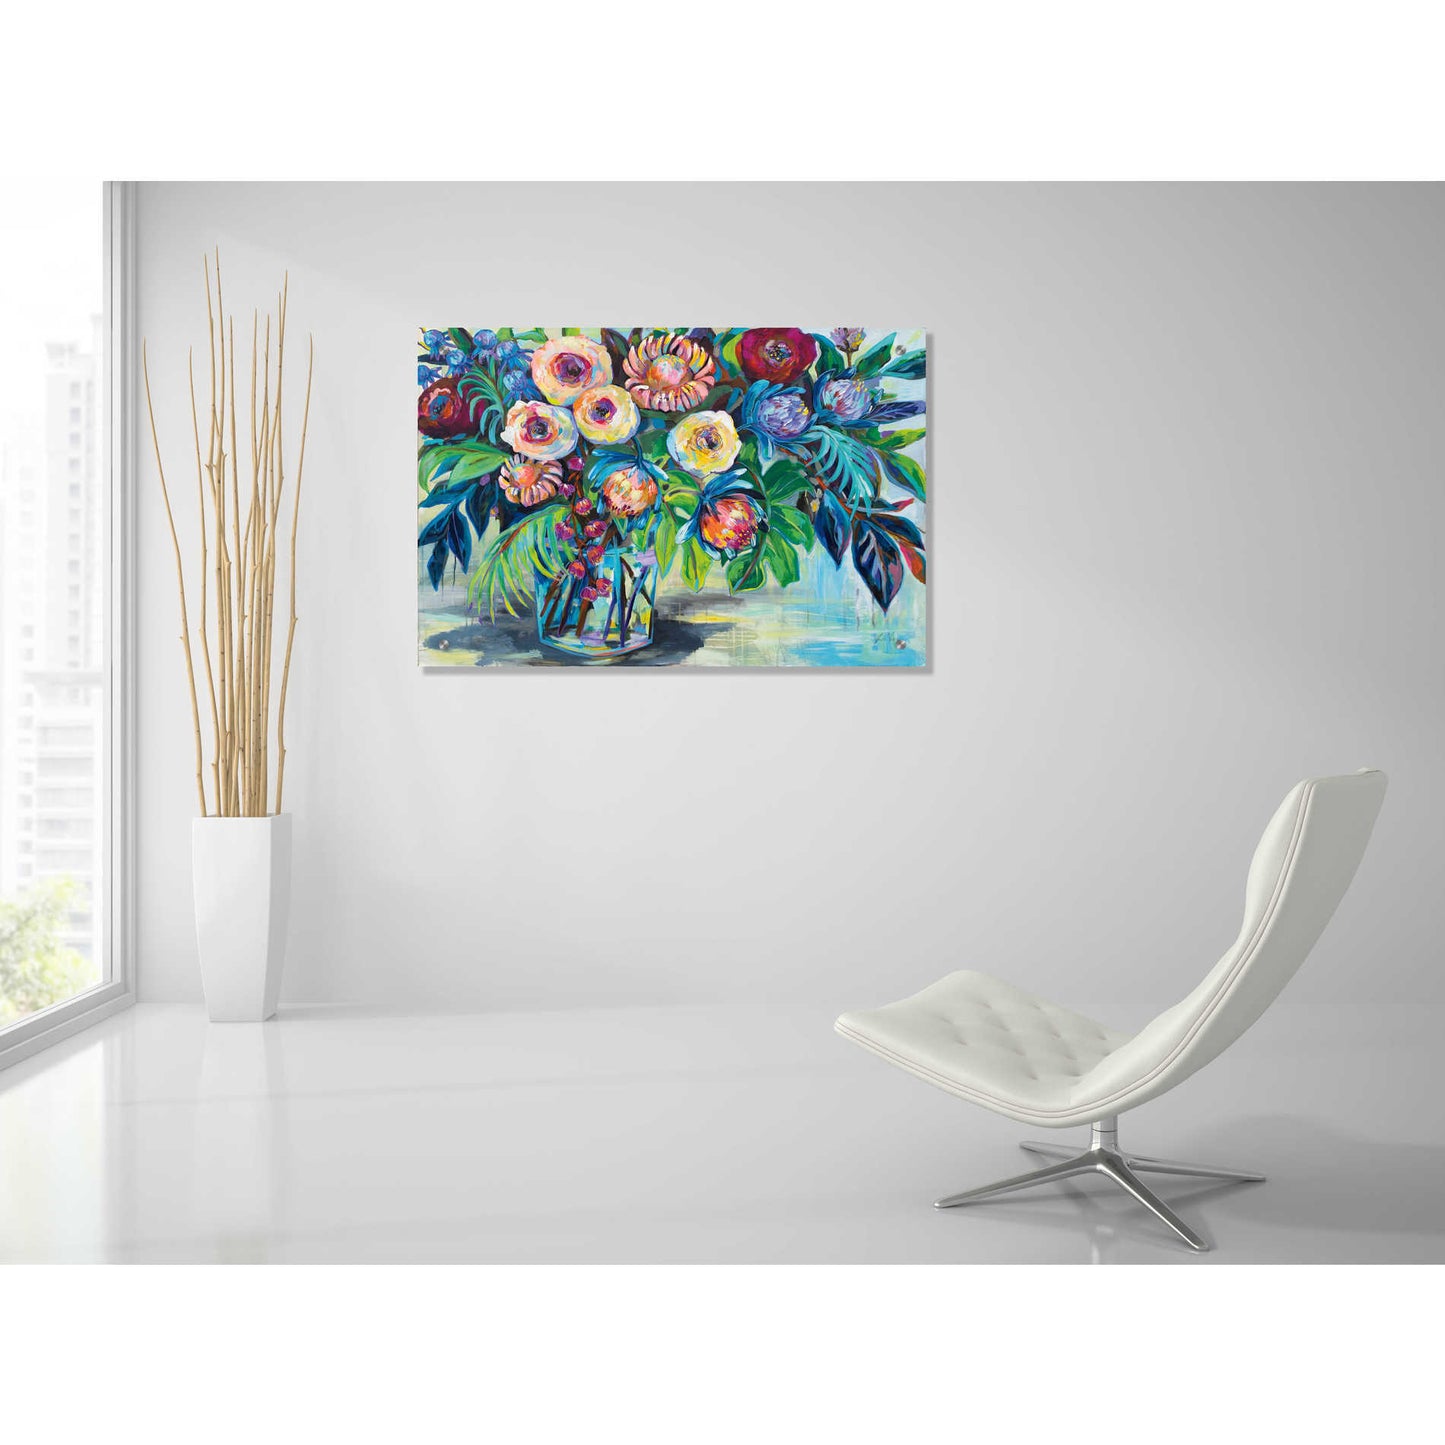 Epic Art 'Key West' by Jeanette Vertentes, Acrylic Glass Wall Art,36x24